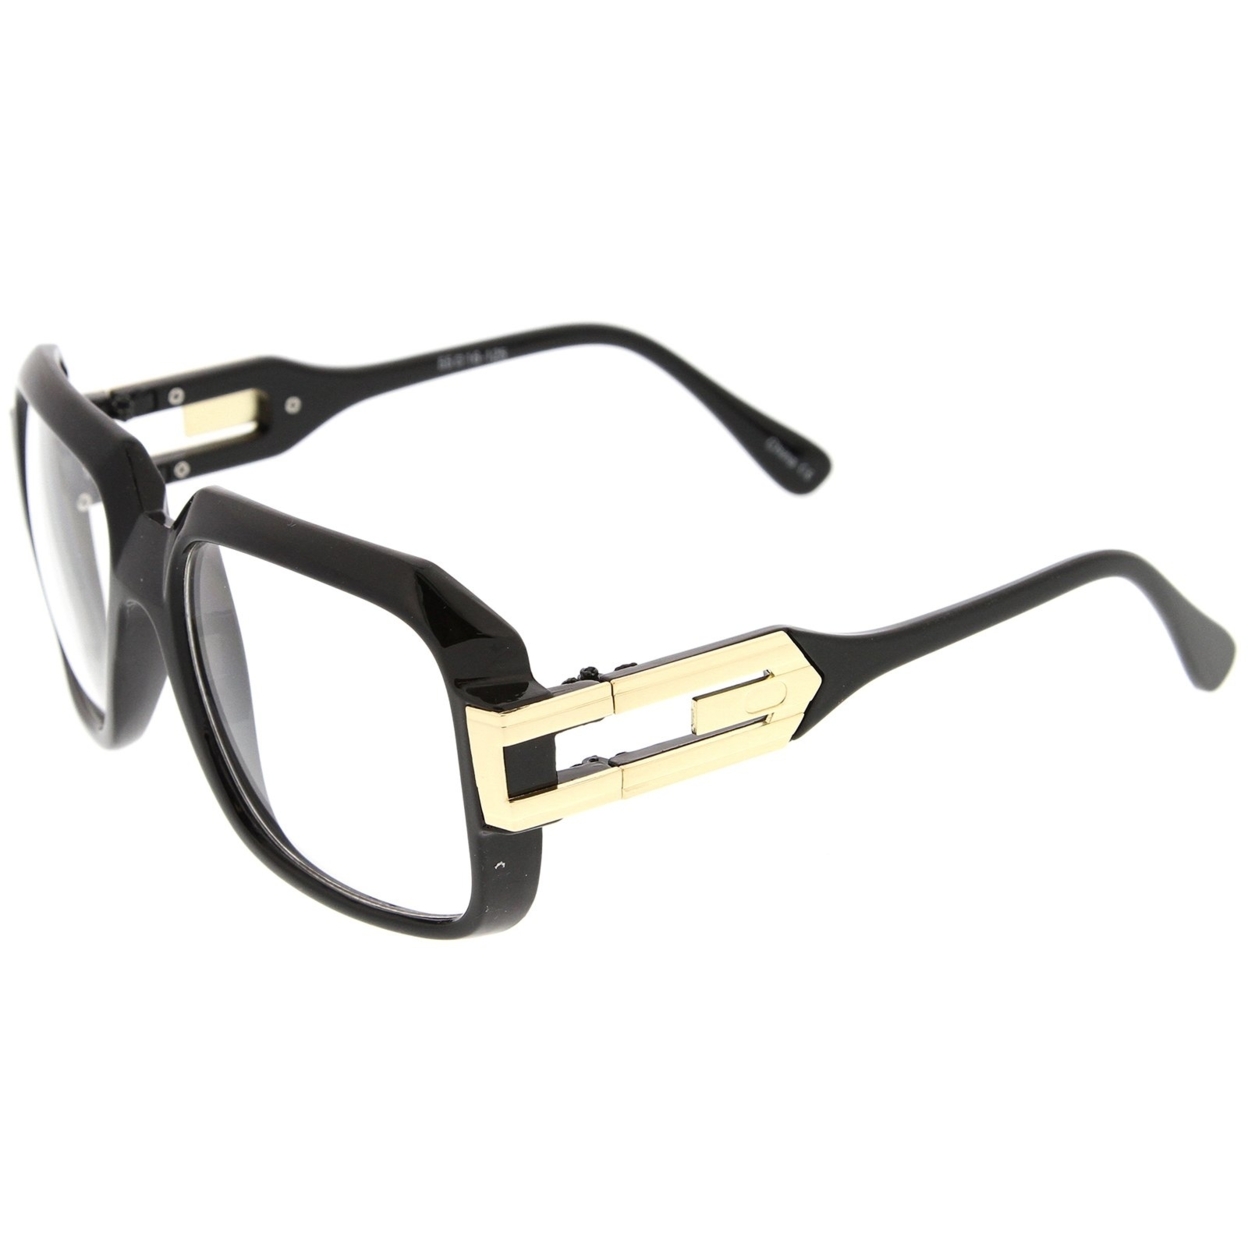 Large Retro Hip Hop Style Clear Lens Square Eyeglasses 54mm - Matte Black-Silver / Clear